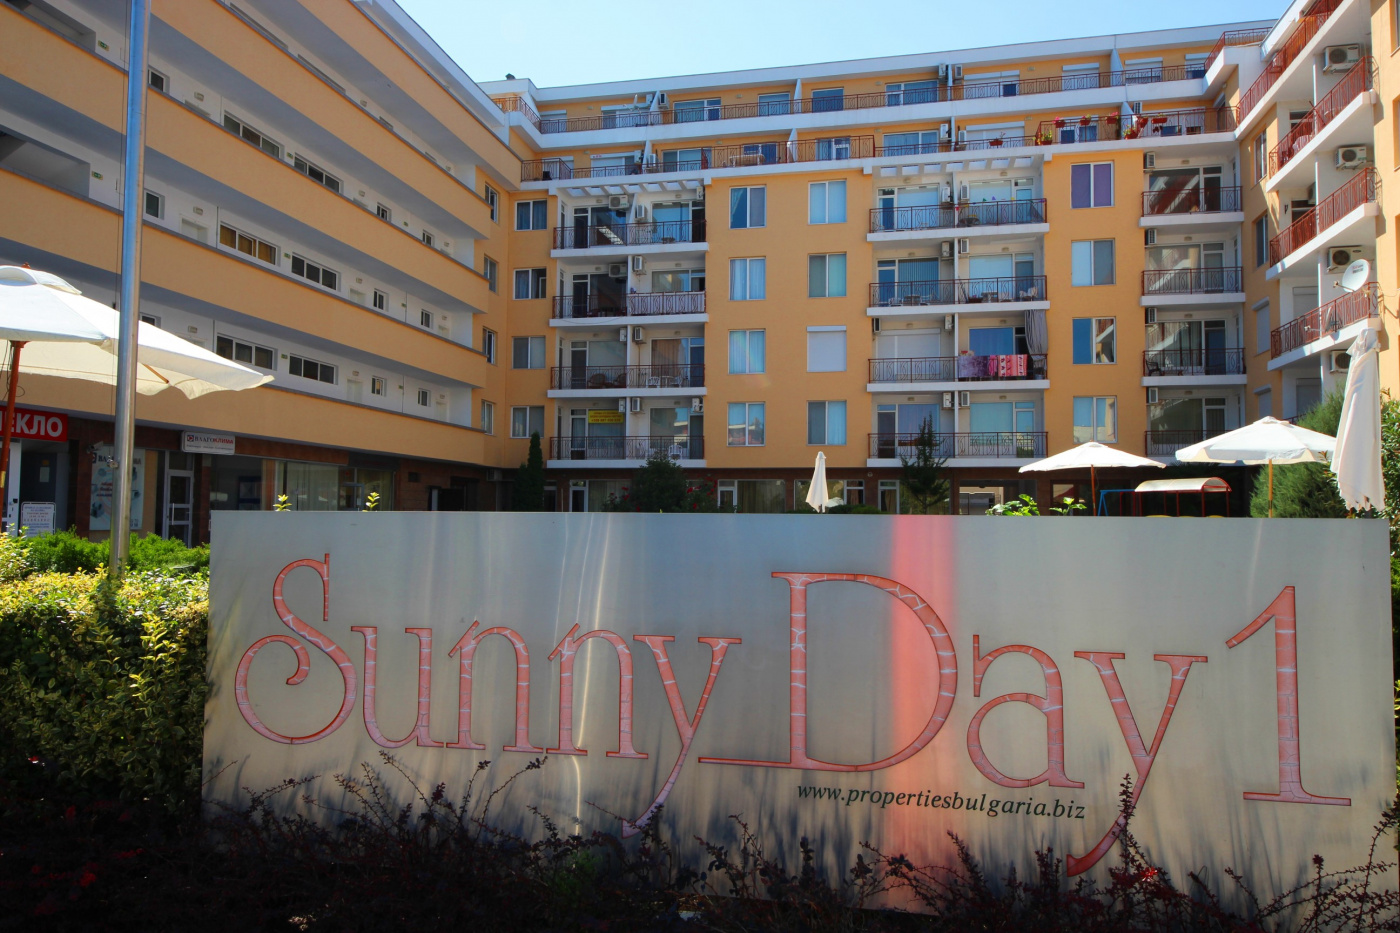 Sunny Day 1 Aparthotel